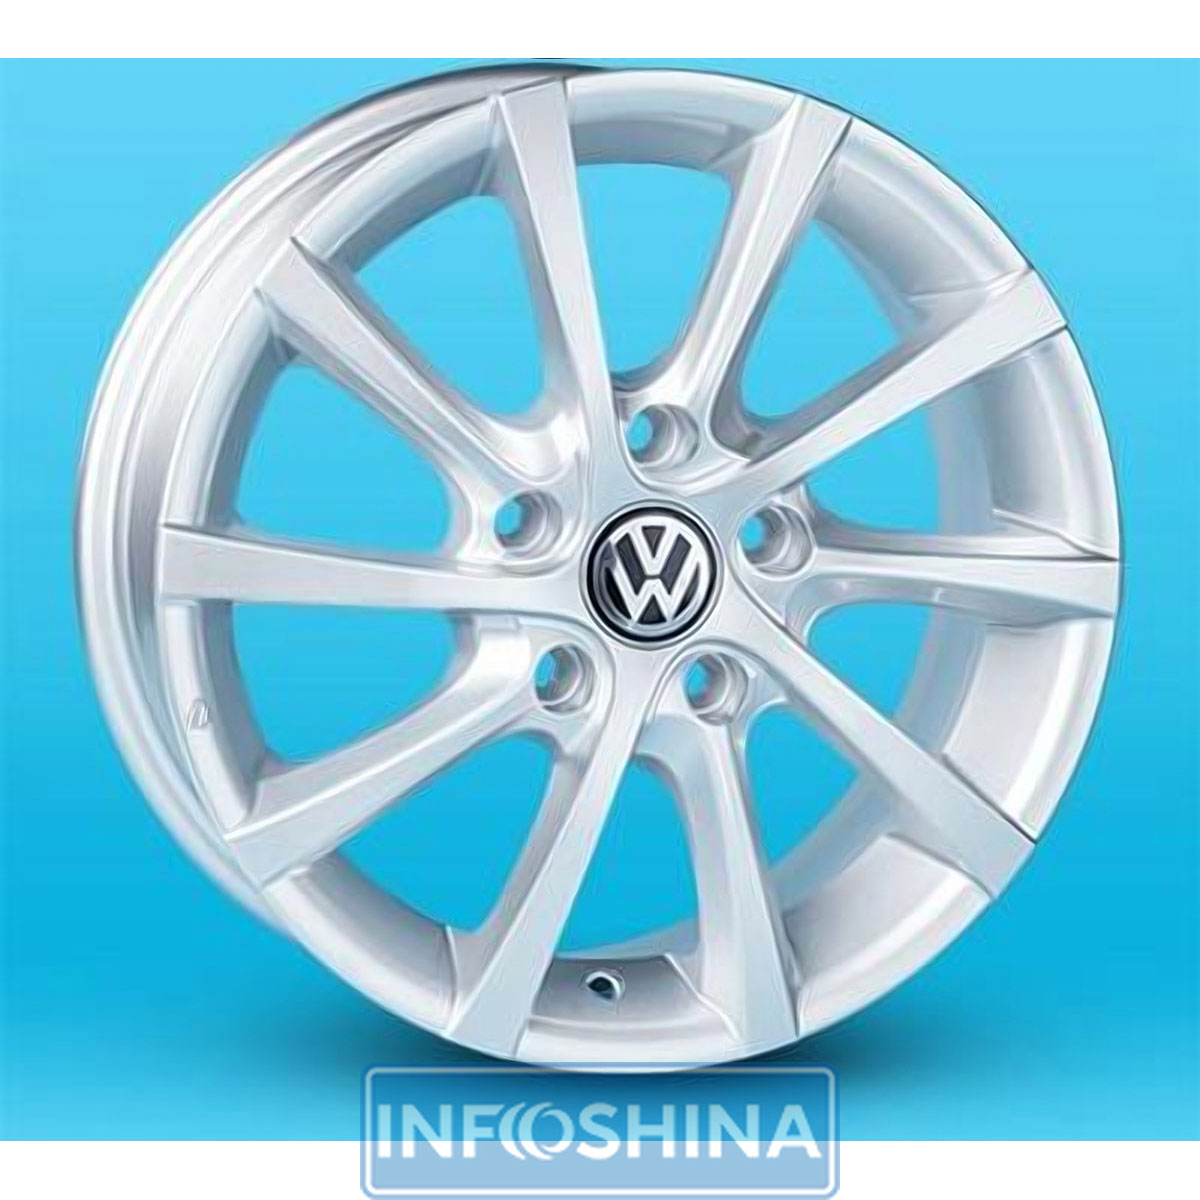 Купить диски Replica Volkswagen JT-1263 S R16 W6.5 PCD5x112 ET45 DIA57.1